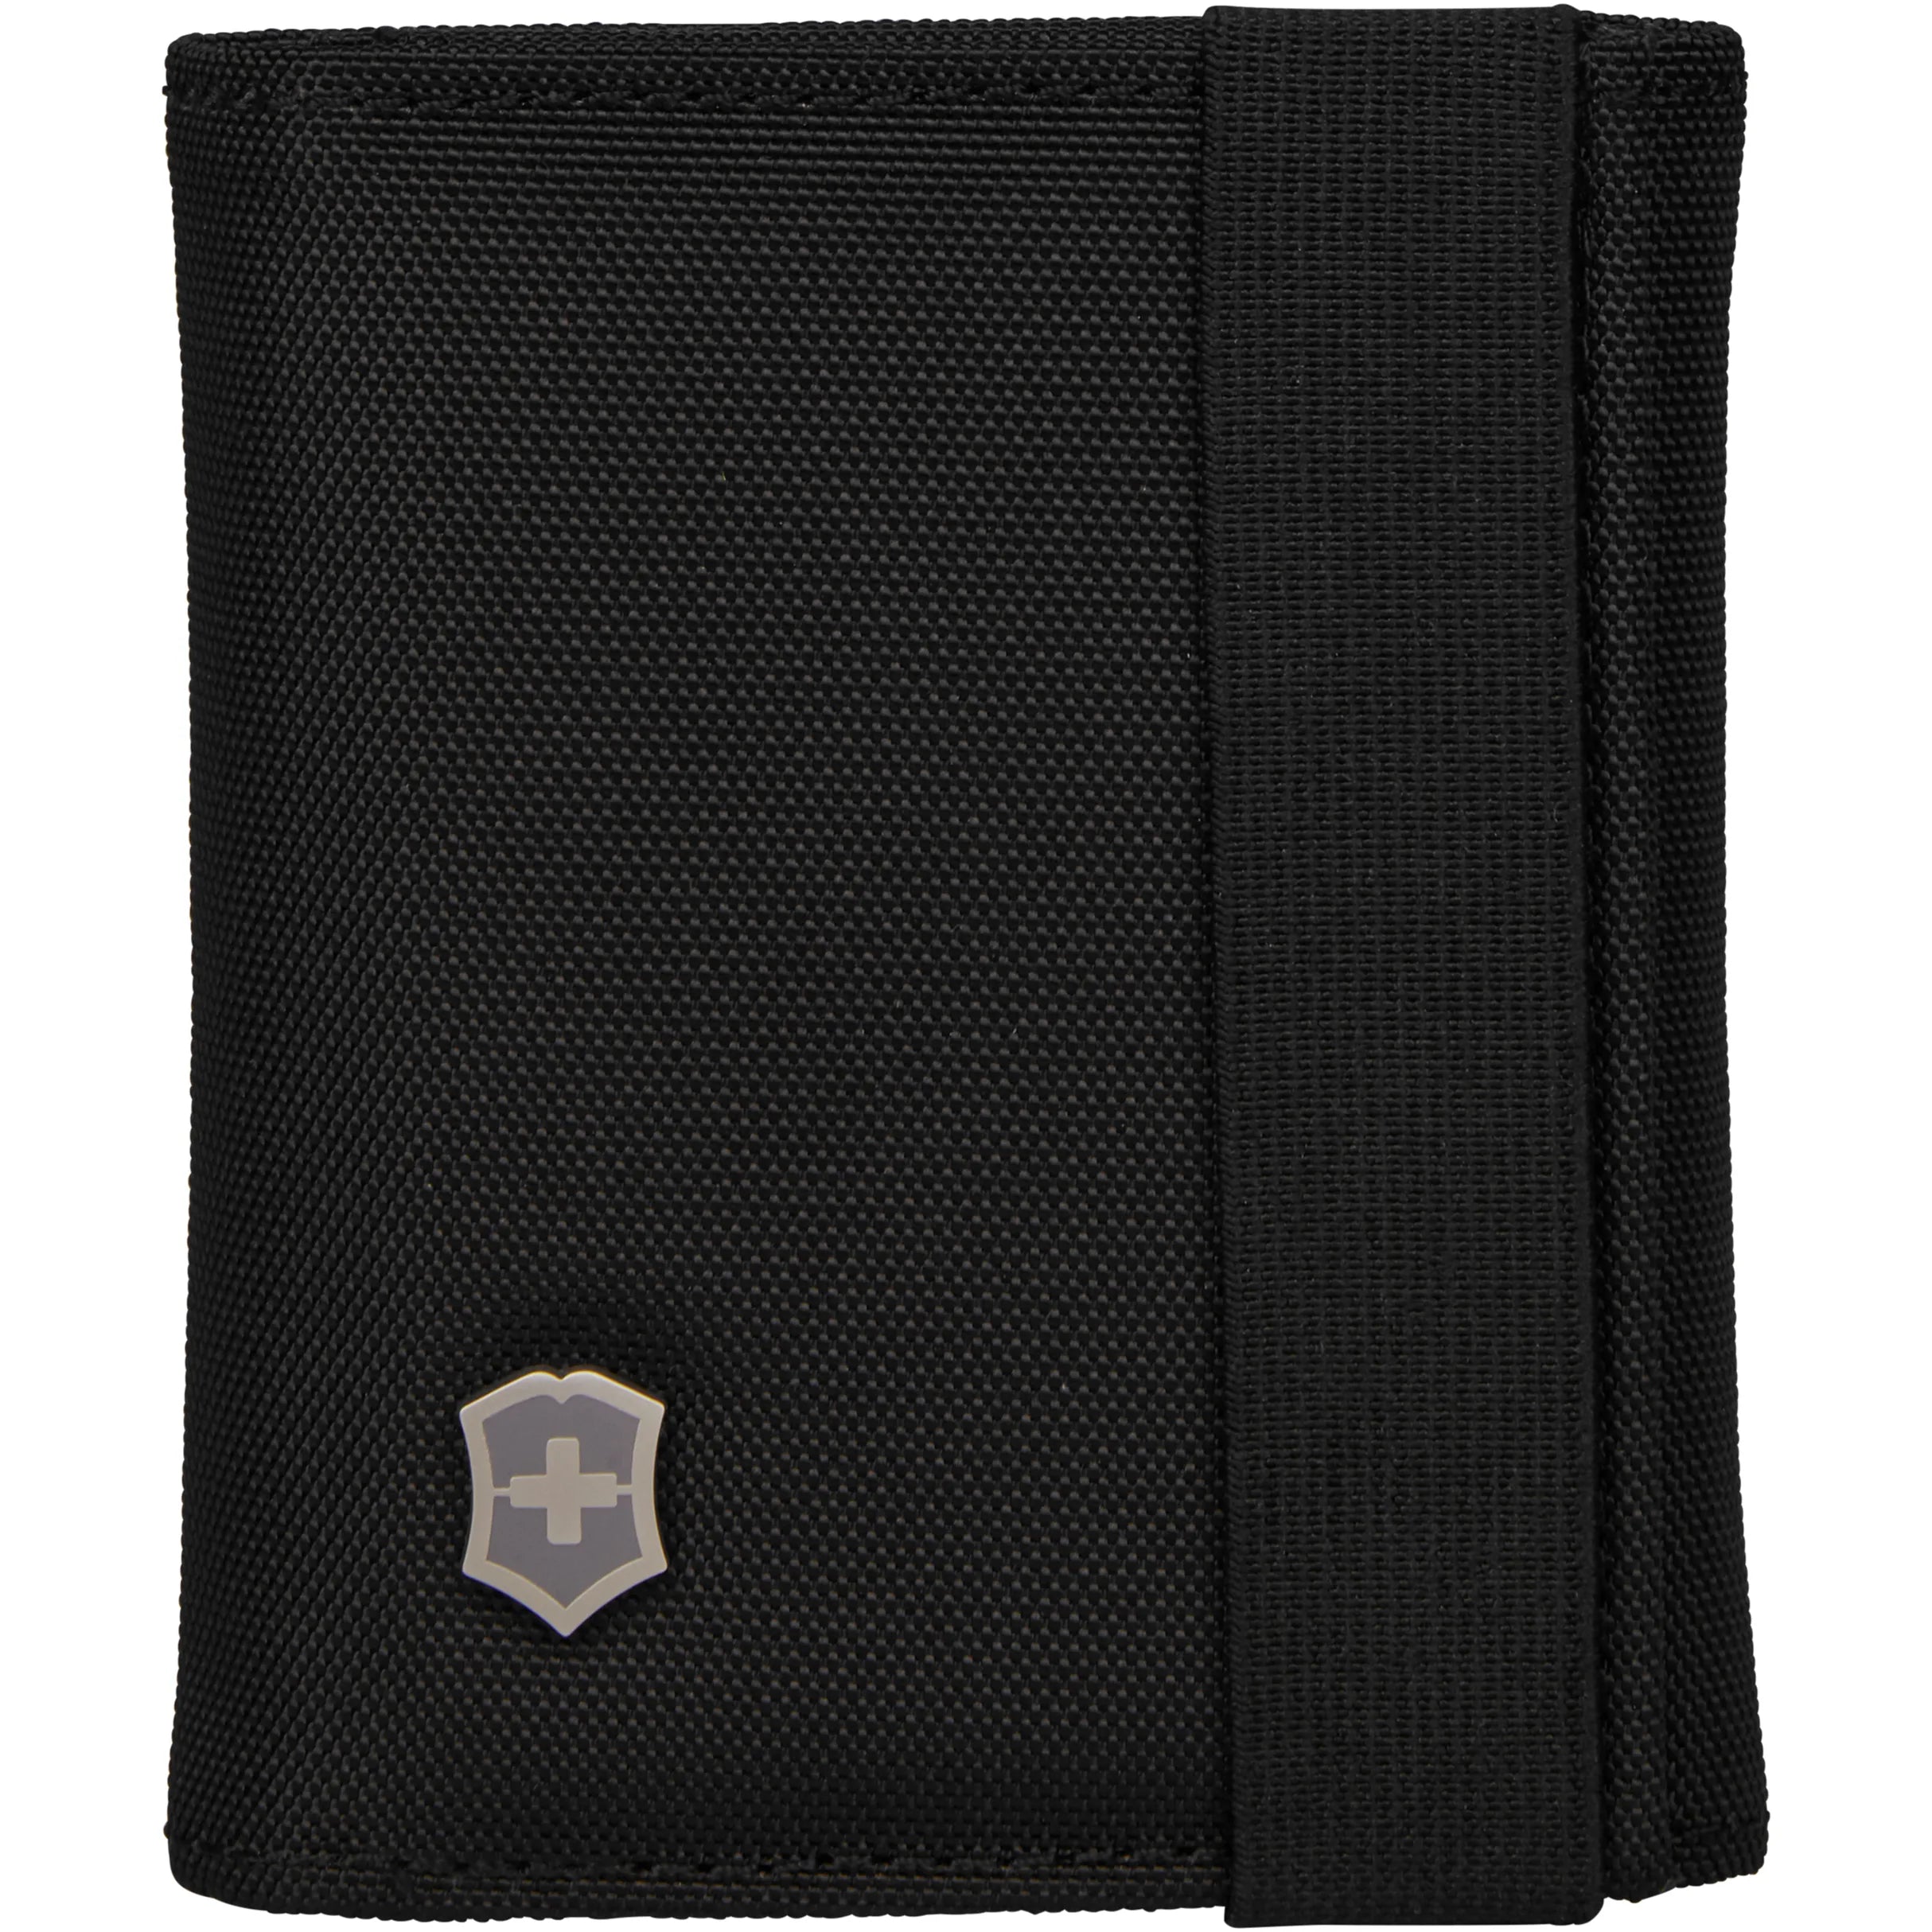 Victorinox Travel Accessories 5.0 Tri-Fold Portemonnaie RFID 10 cm - Black